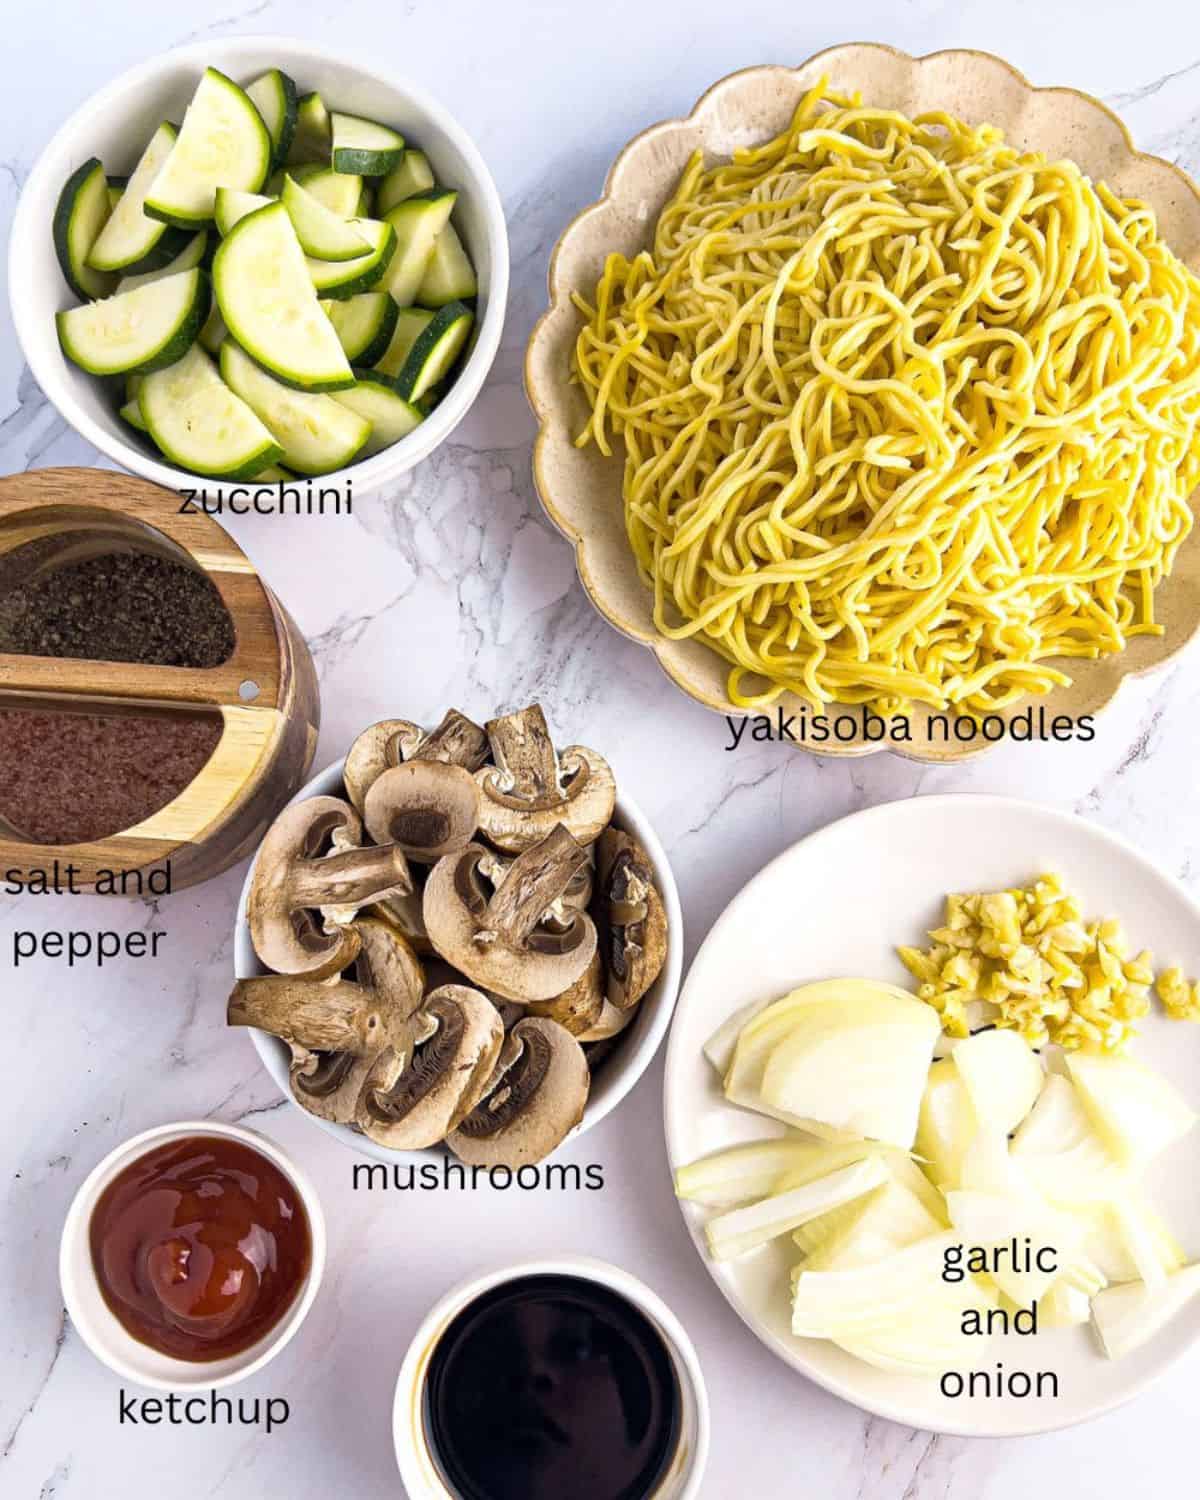 Ingredients for veggie yakisoba recipe.